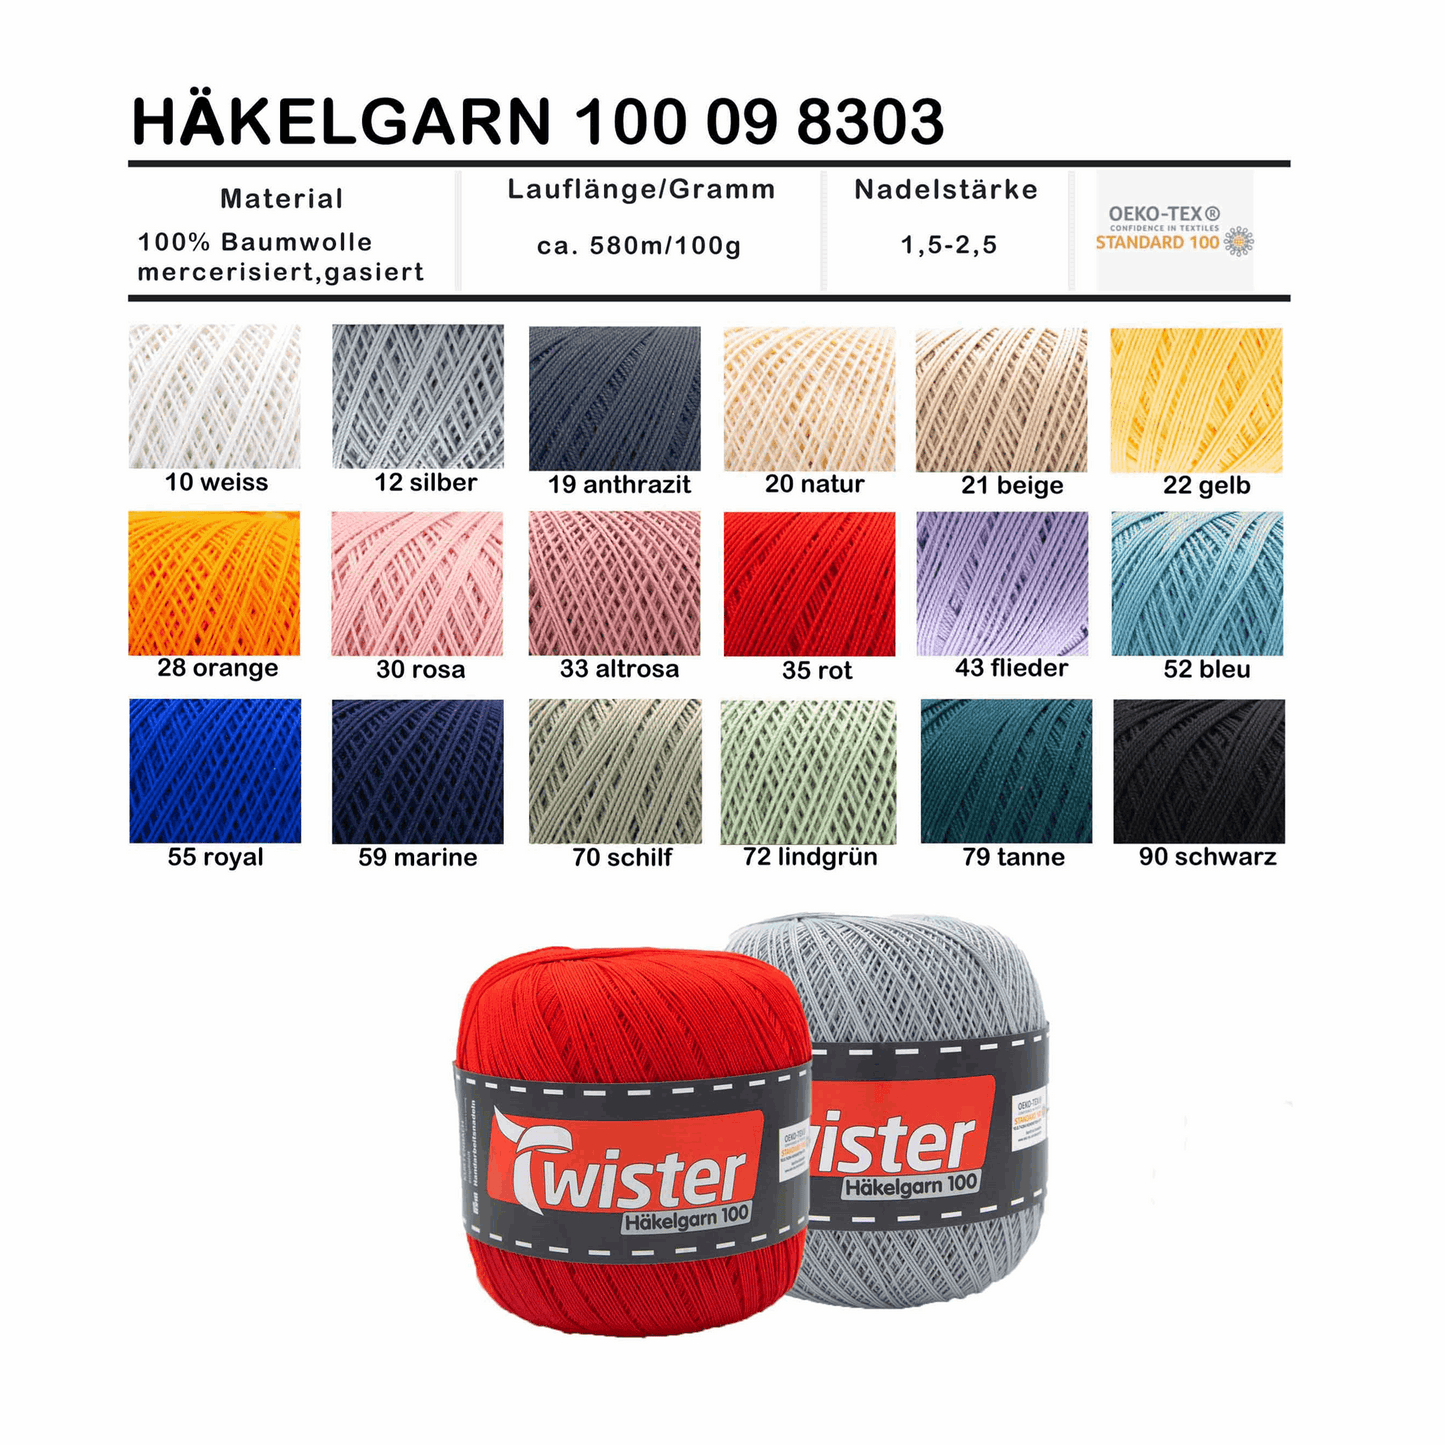 Twister crochet yarn, 100g, 98303, color black 90